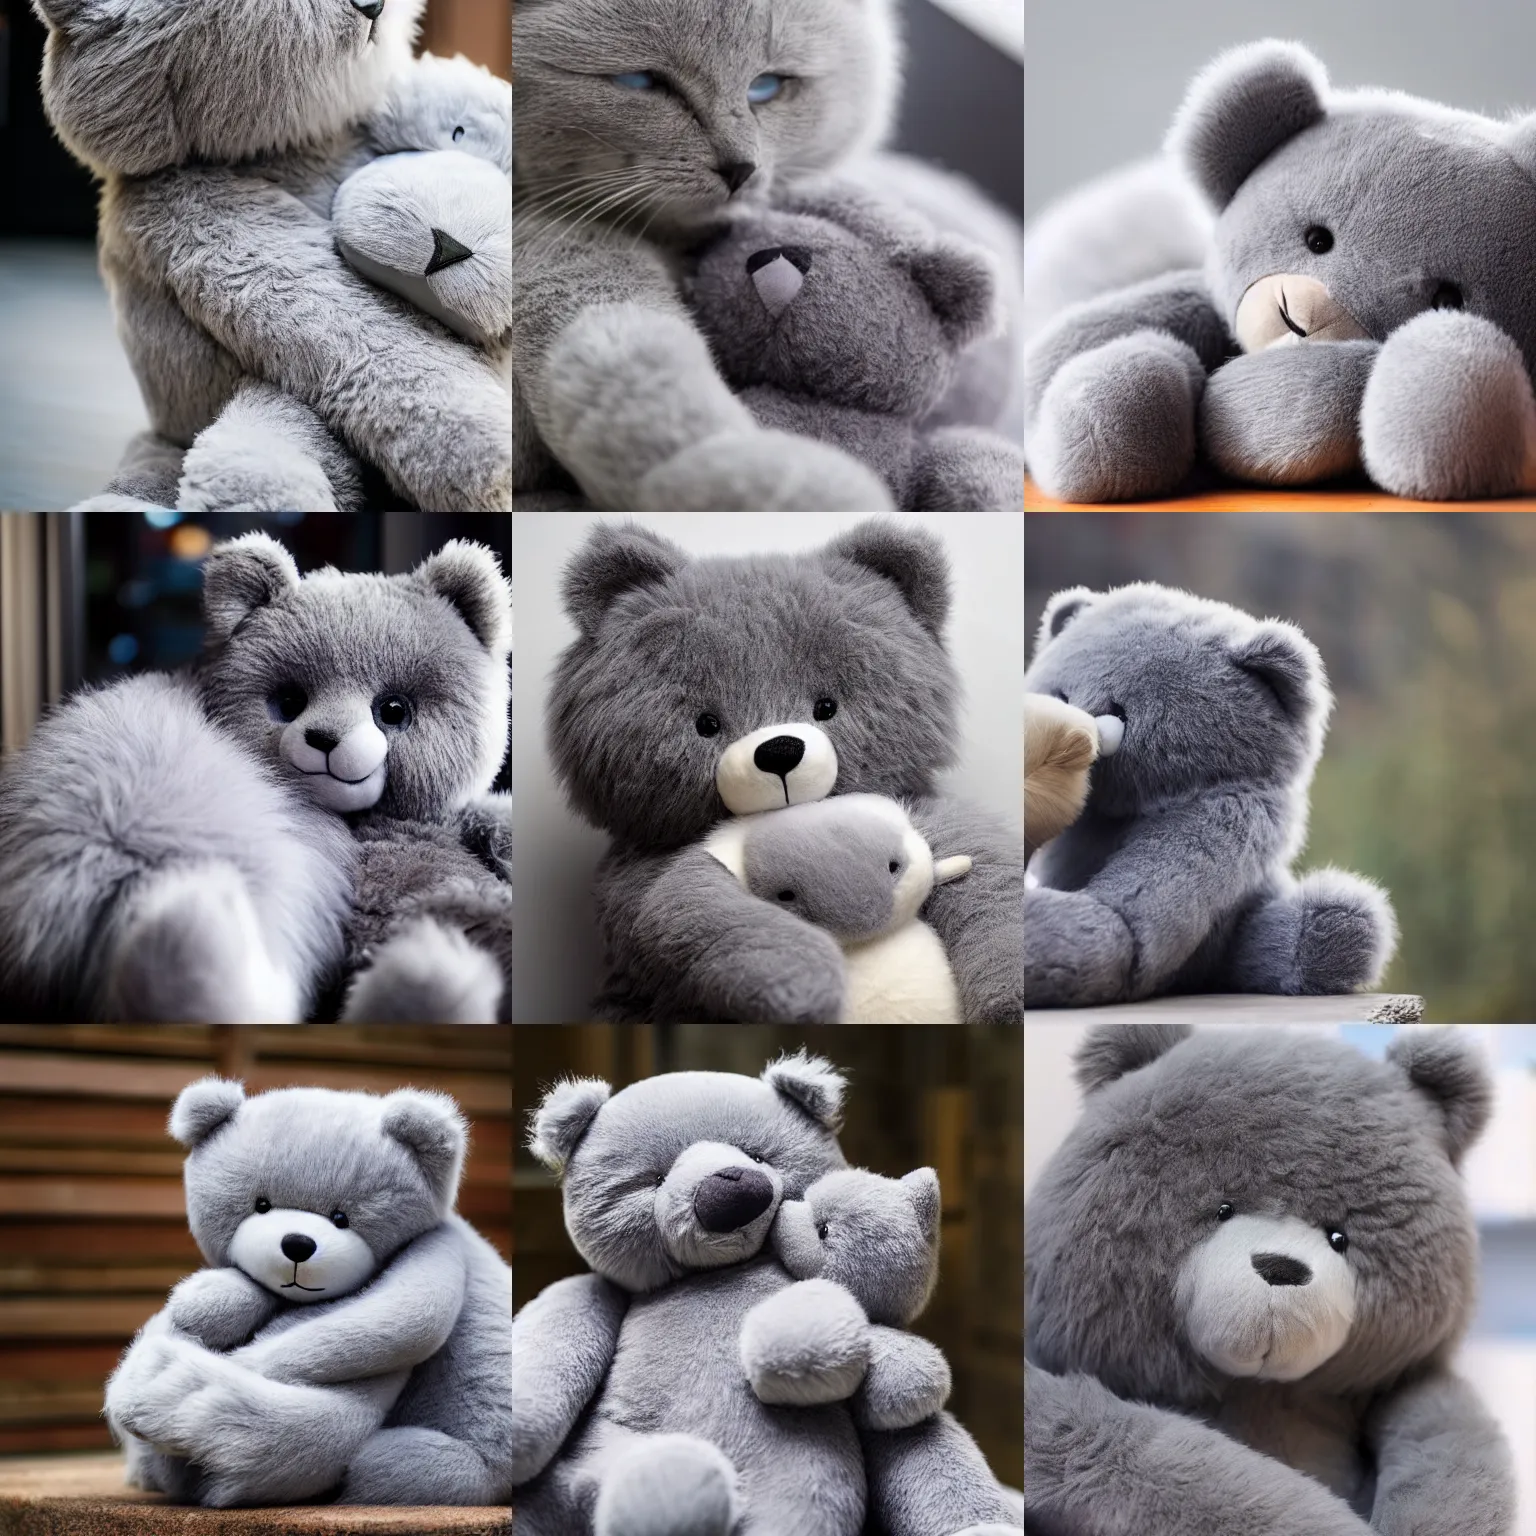 Prompt: a cute gray cat hugging a fluffy teddybear, hd, award winning, 4k